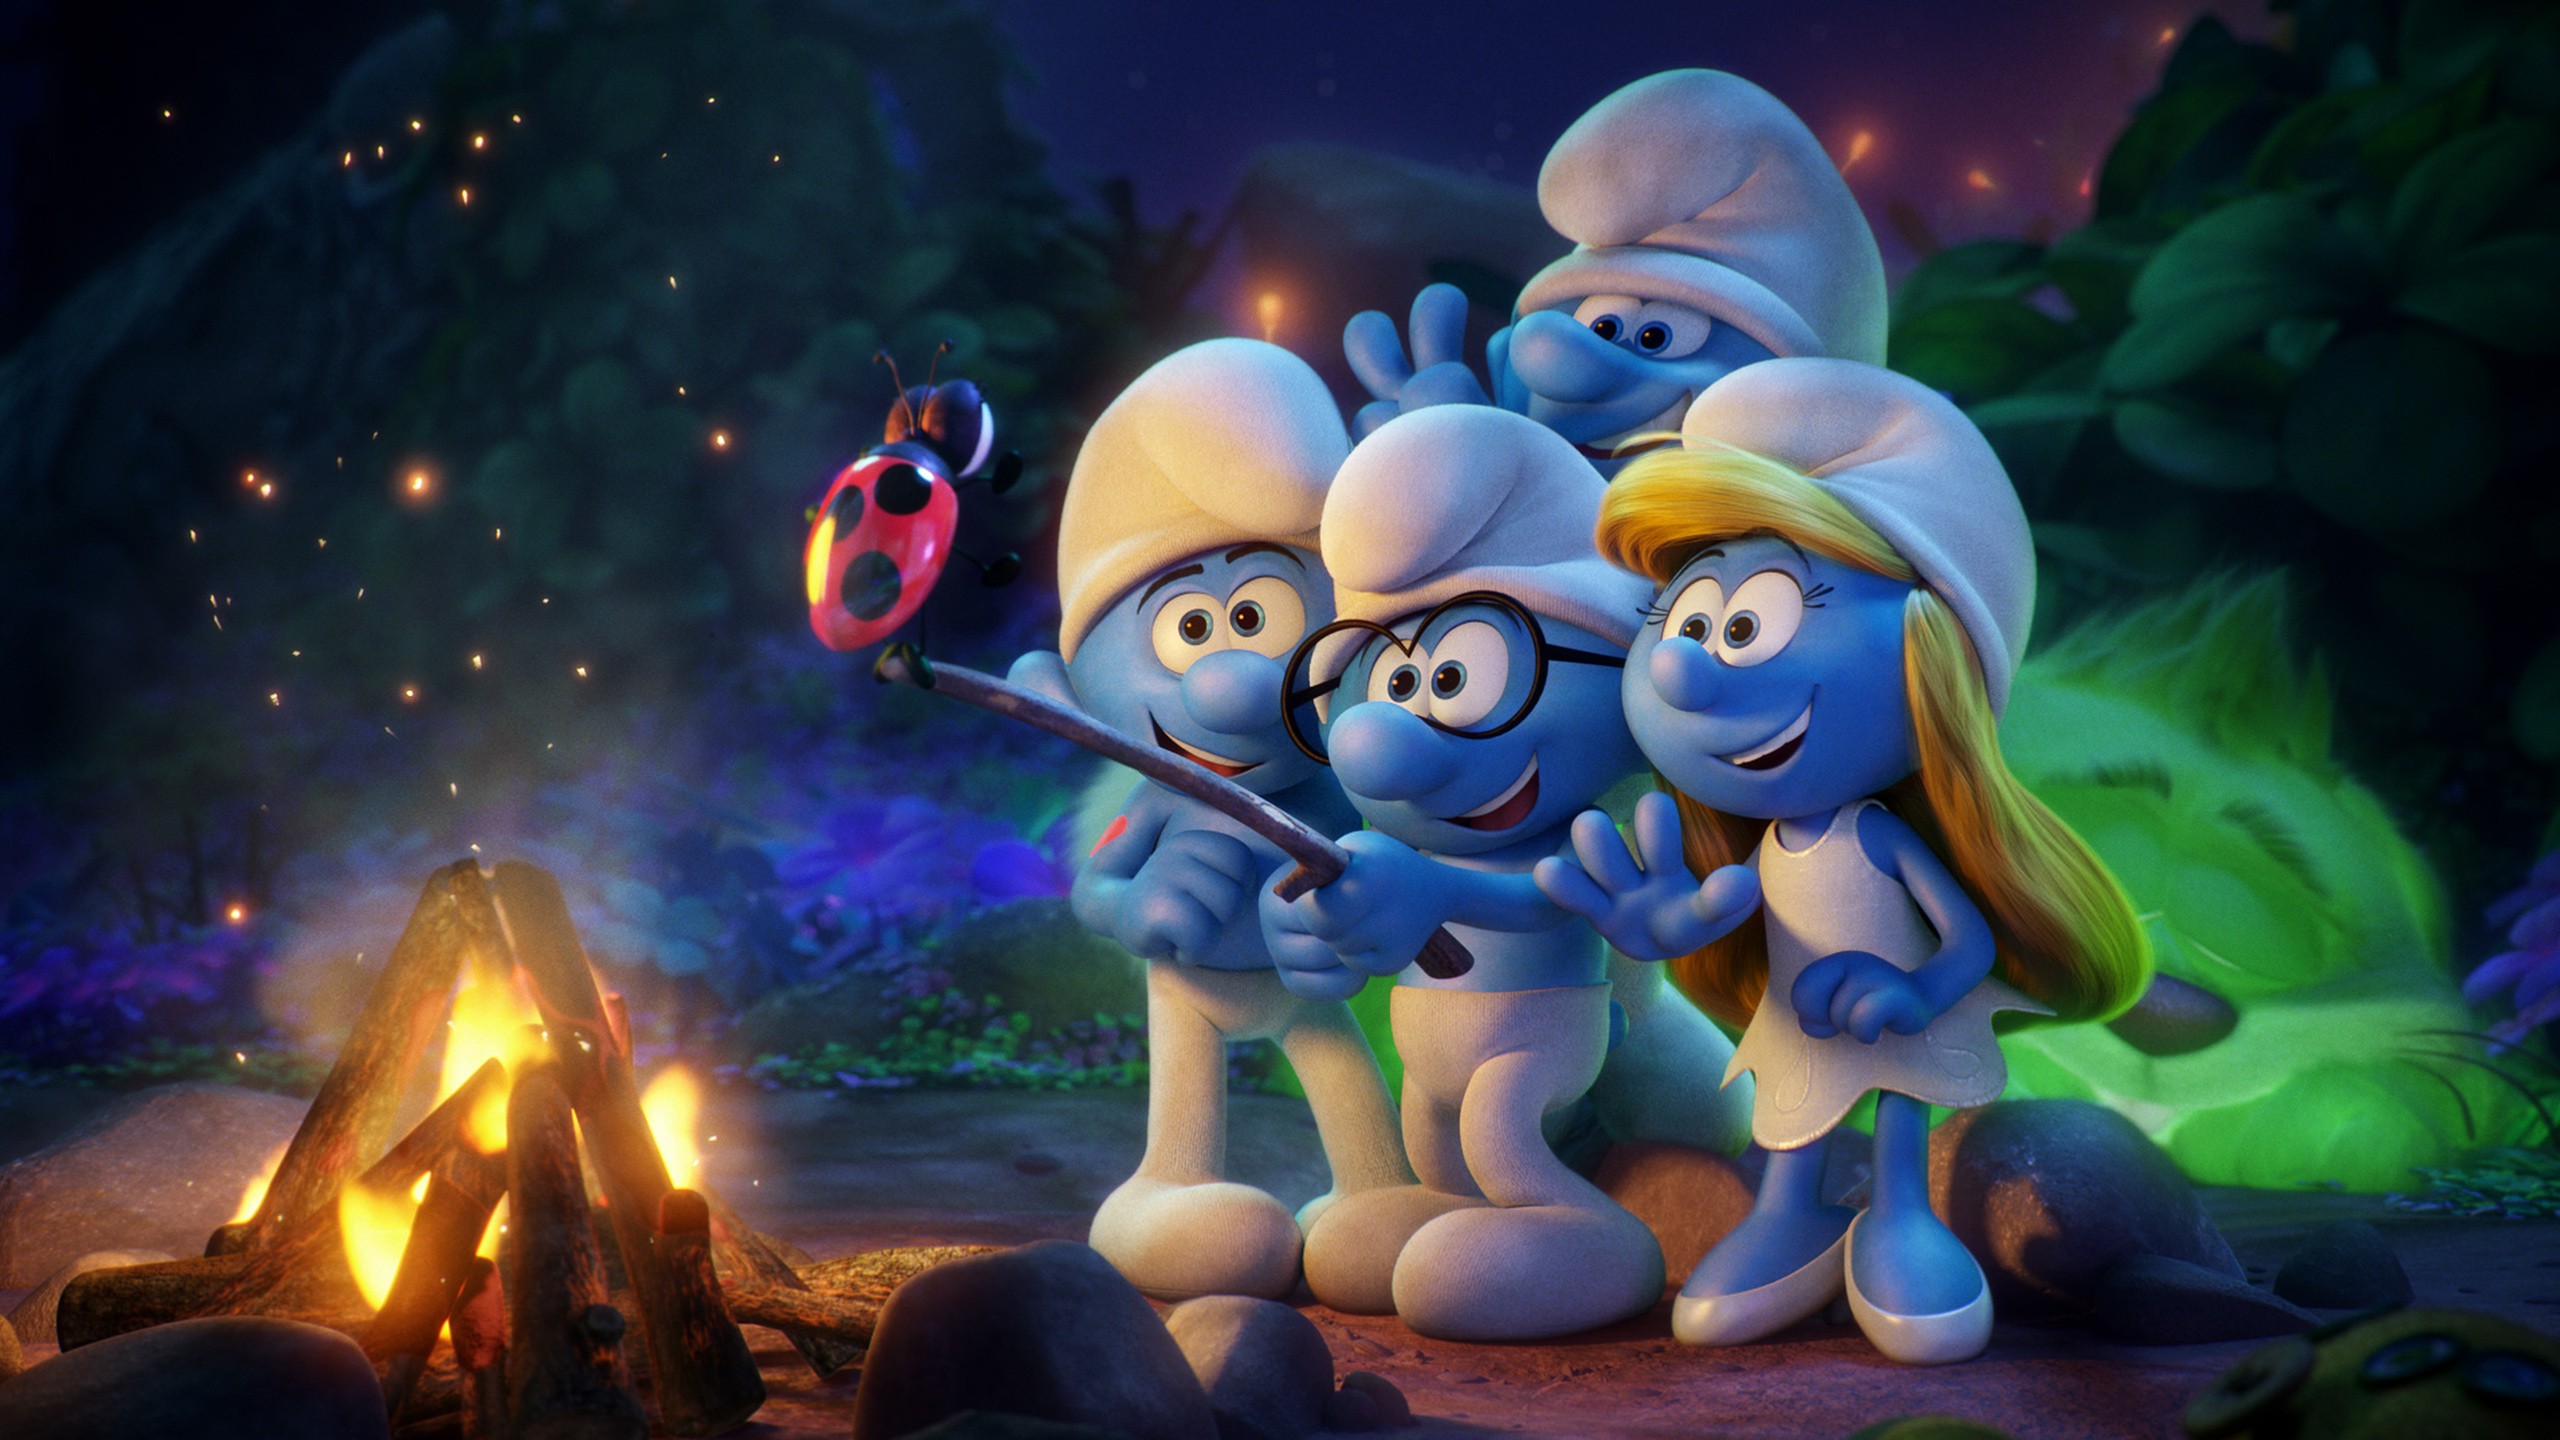 Smurfs The Lost Village Animation Movie - Download hd ...